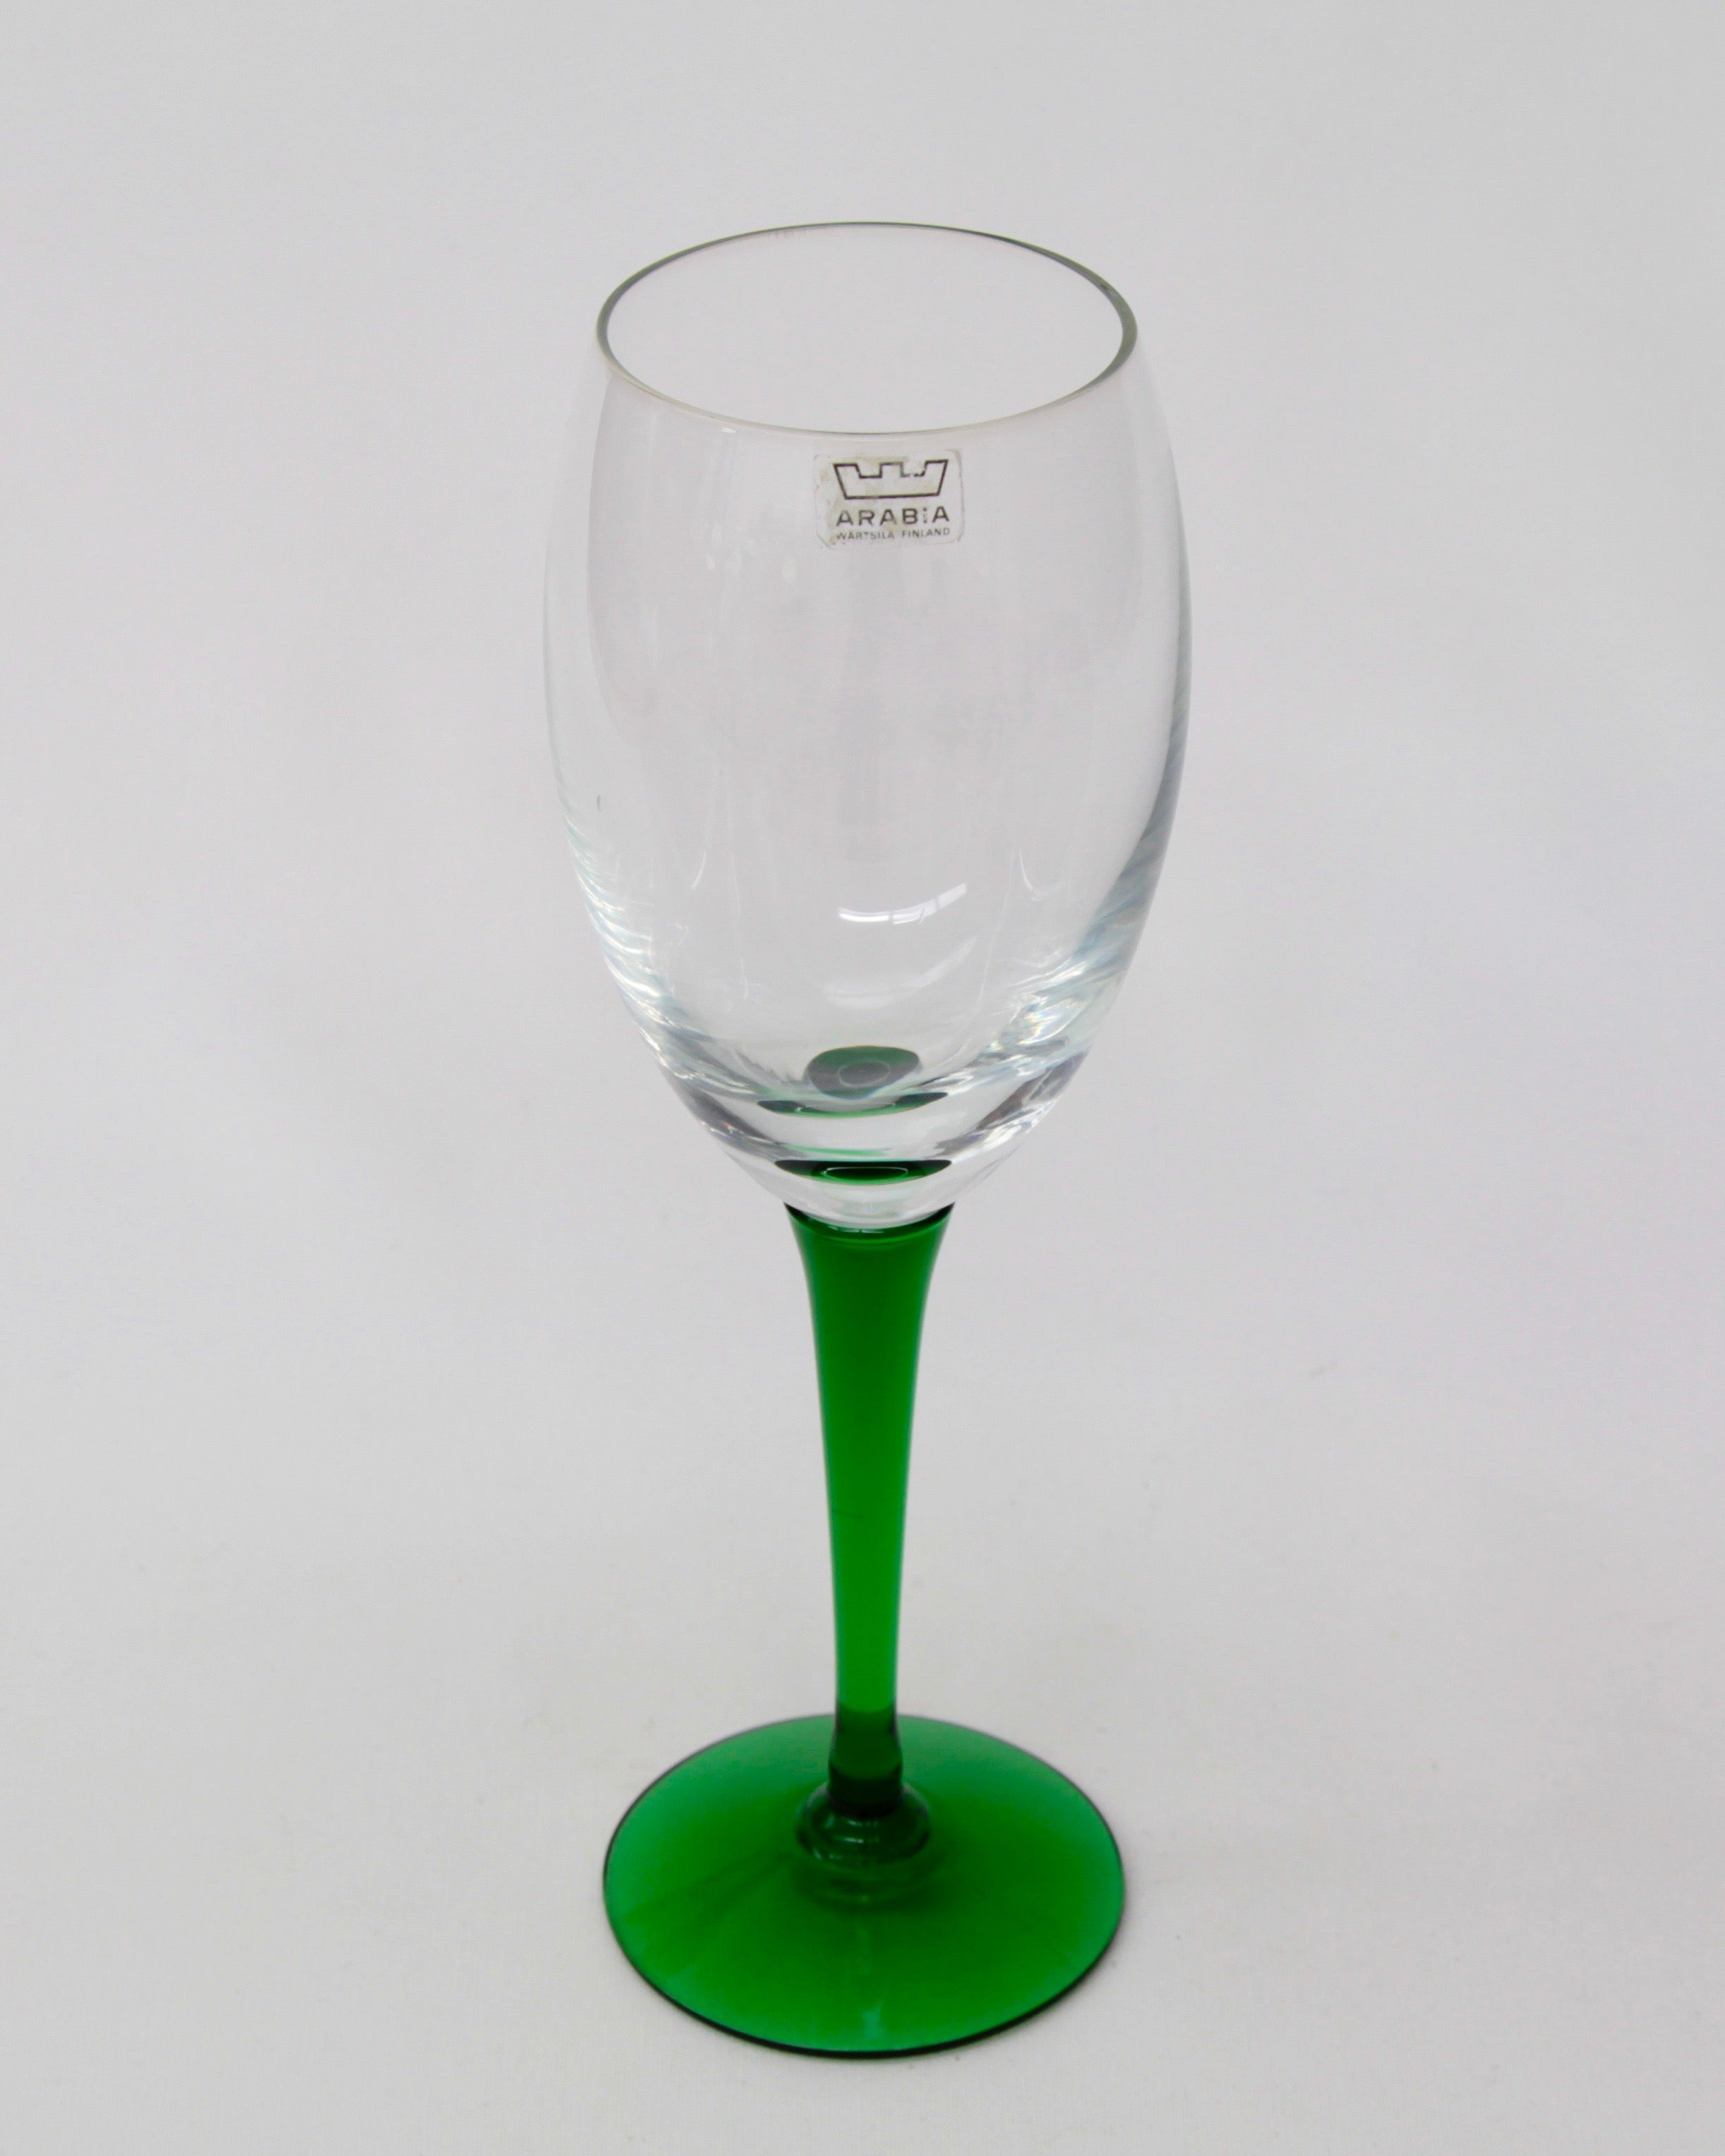 Saara Hopea Traviata white wine glass 1122 12 cl